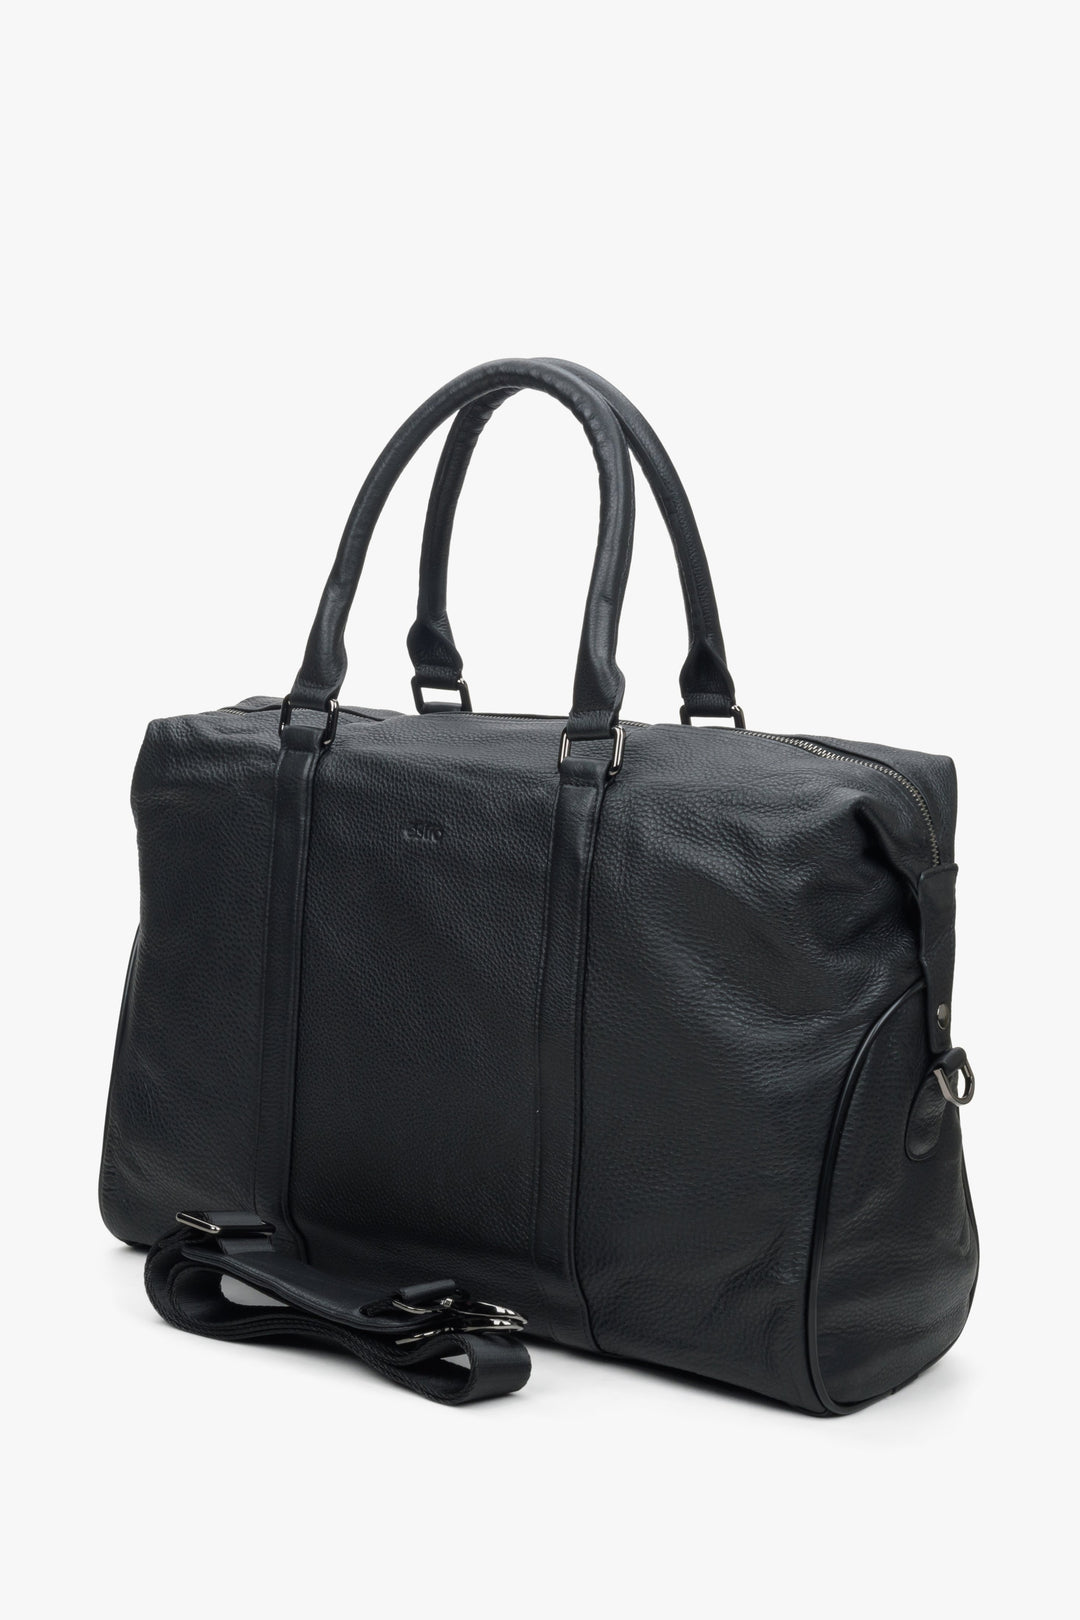 Men's black travel bag made of genuine leather by Estro.